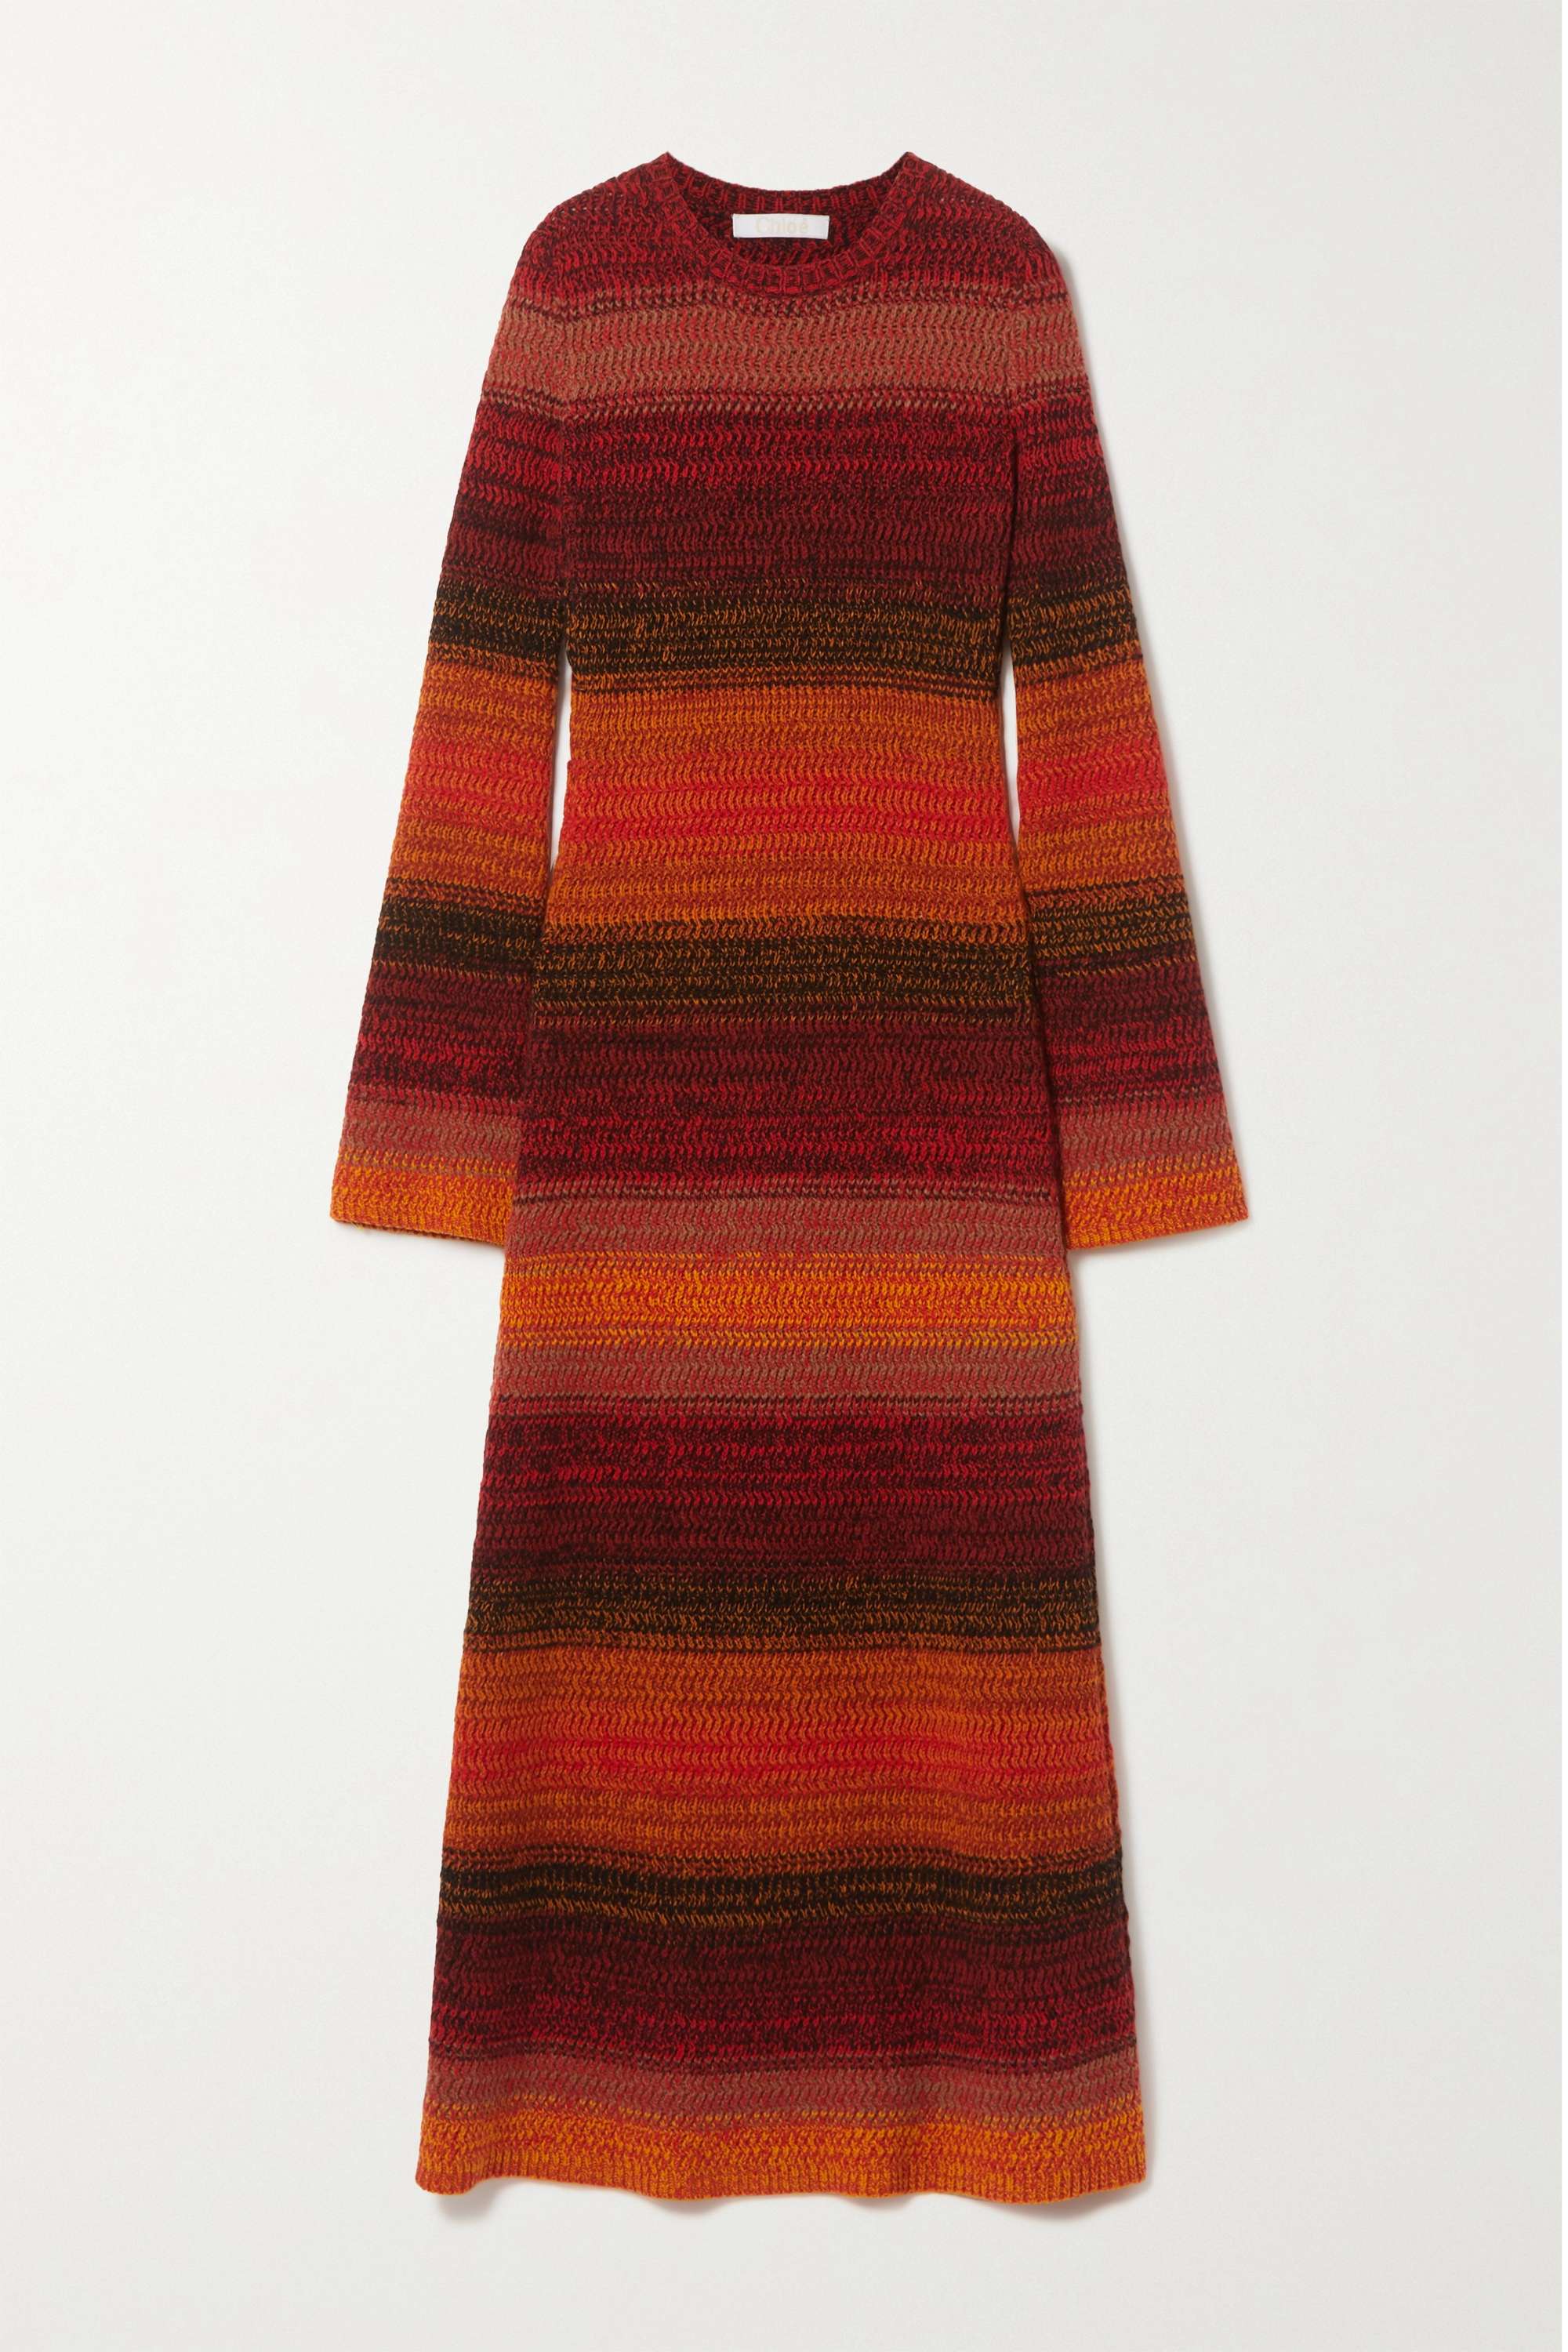 Chloé Striped Ribbed Cashmere Maxi Dress